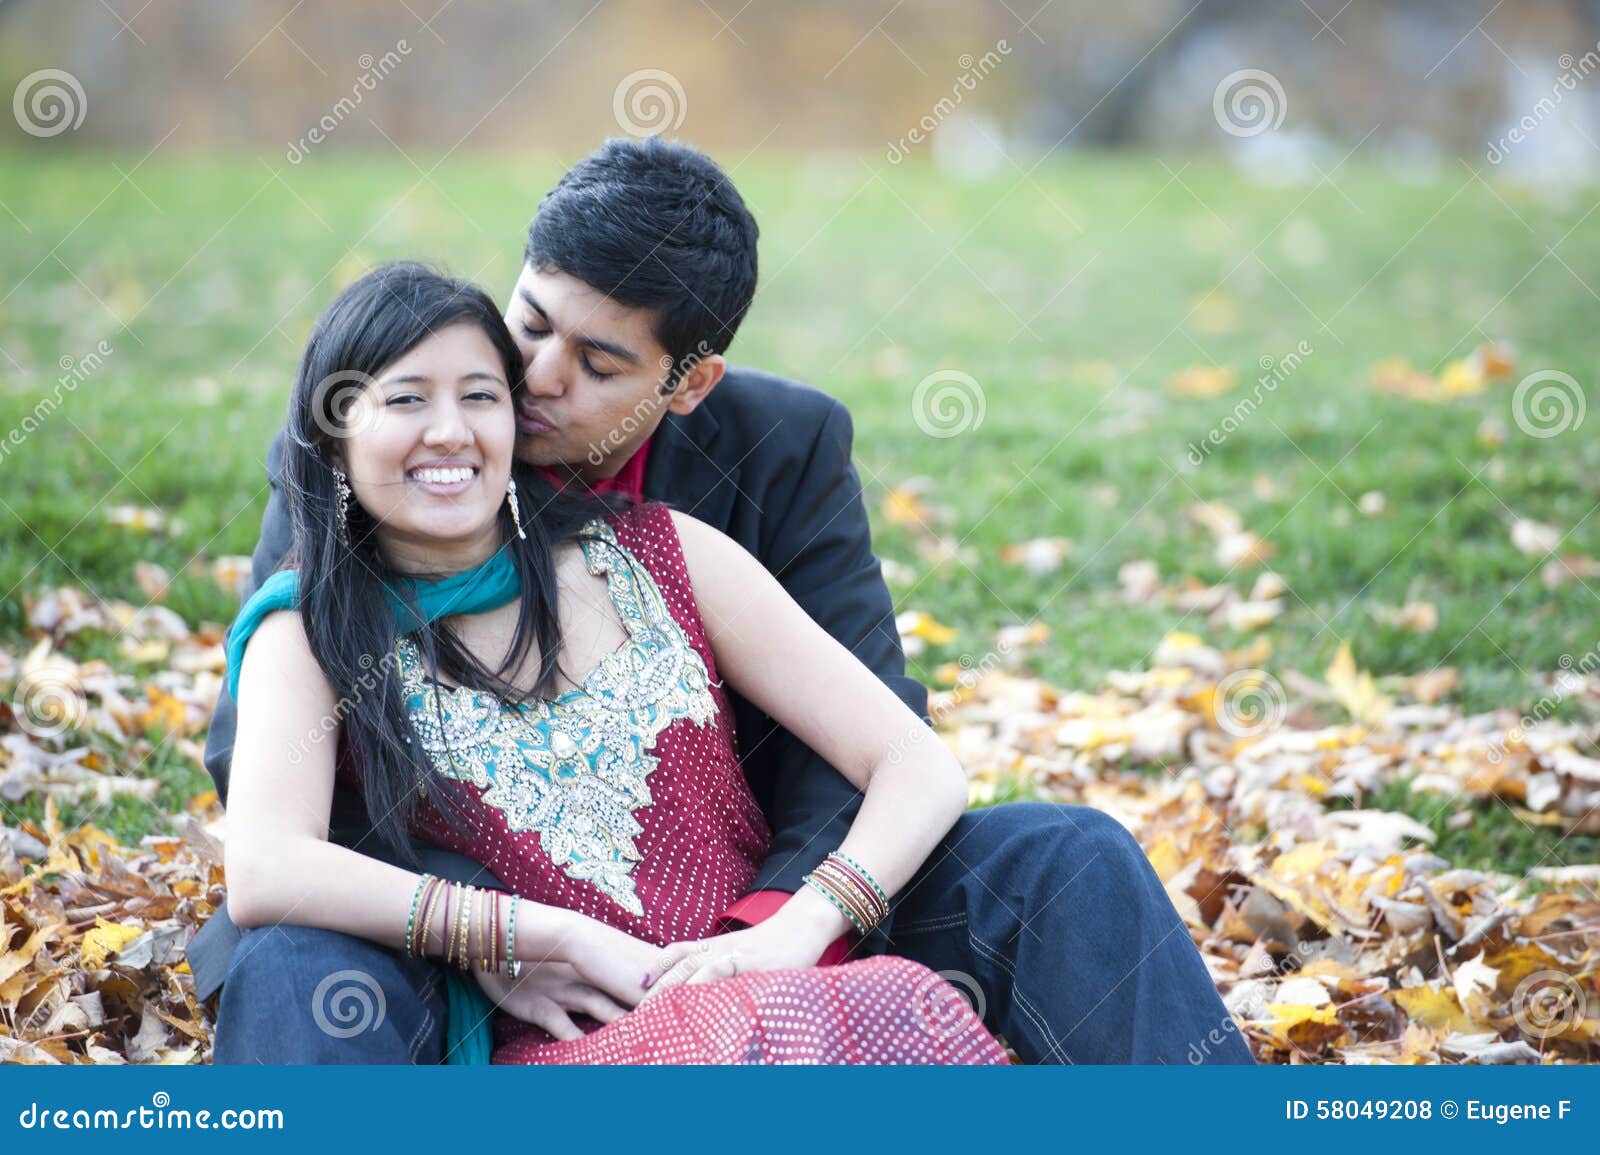 Pin by Mila Mila on INDIA | Indian wedding couple, Wedding couple poses,  Indian wedding photography poses